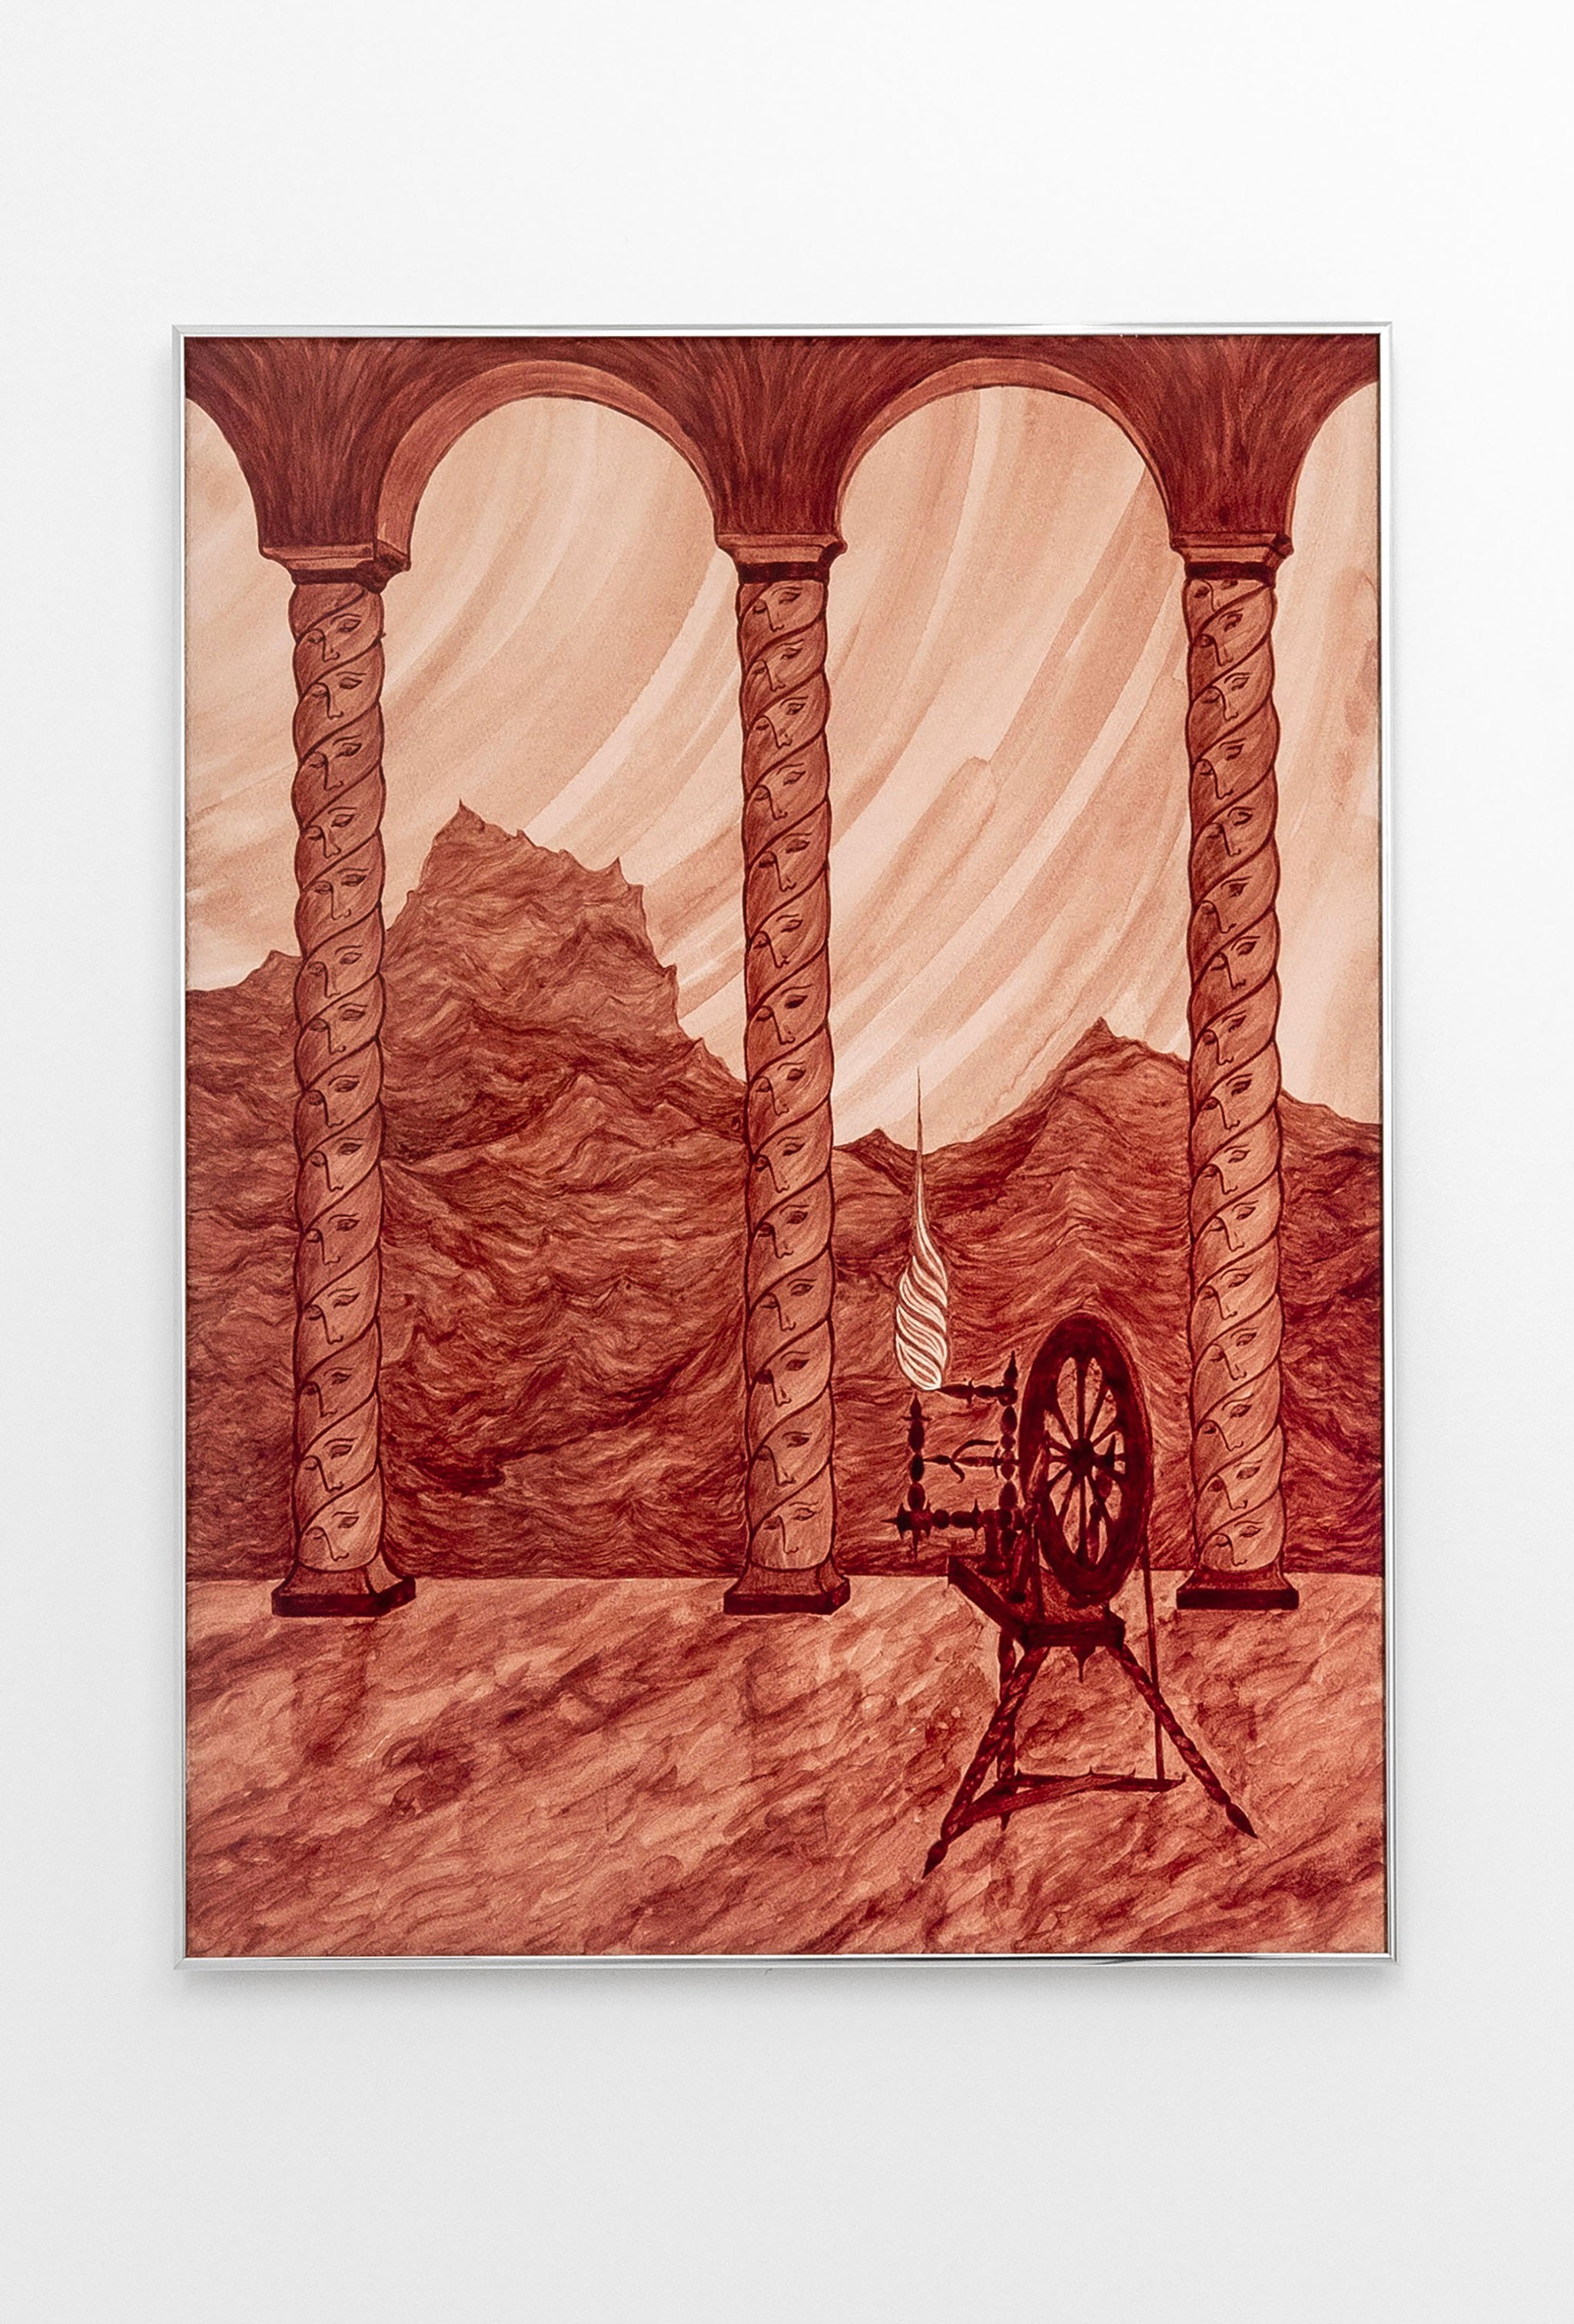 Alison Flora, "Le filage des montagnes", 2022, Human blood on paper, 76 × 56 cm. Bright aluminium frame. Photo credit Romain Darnaud